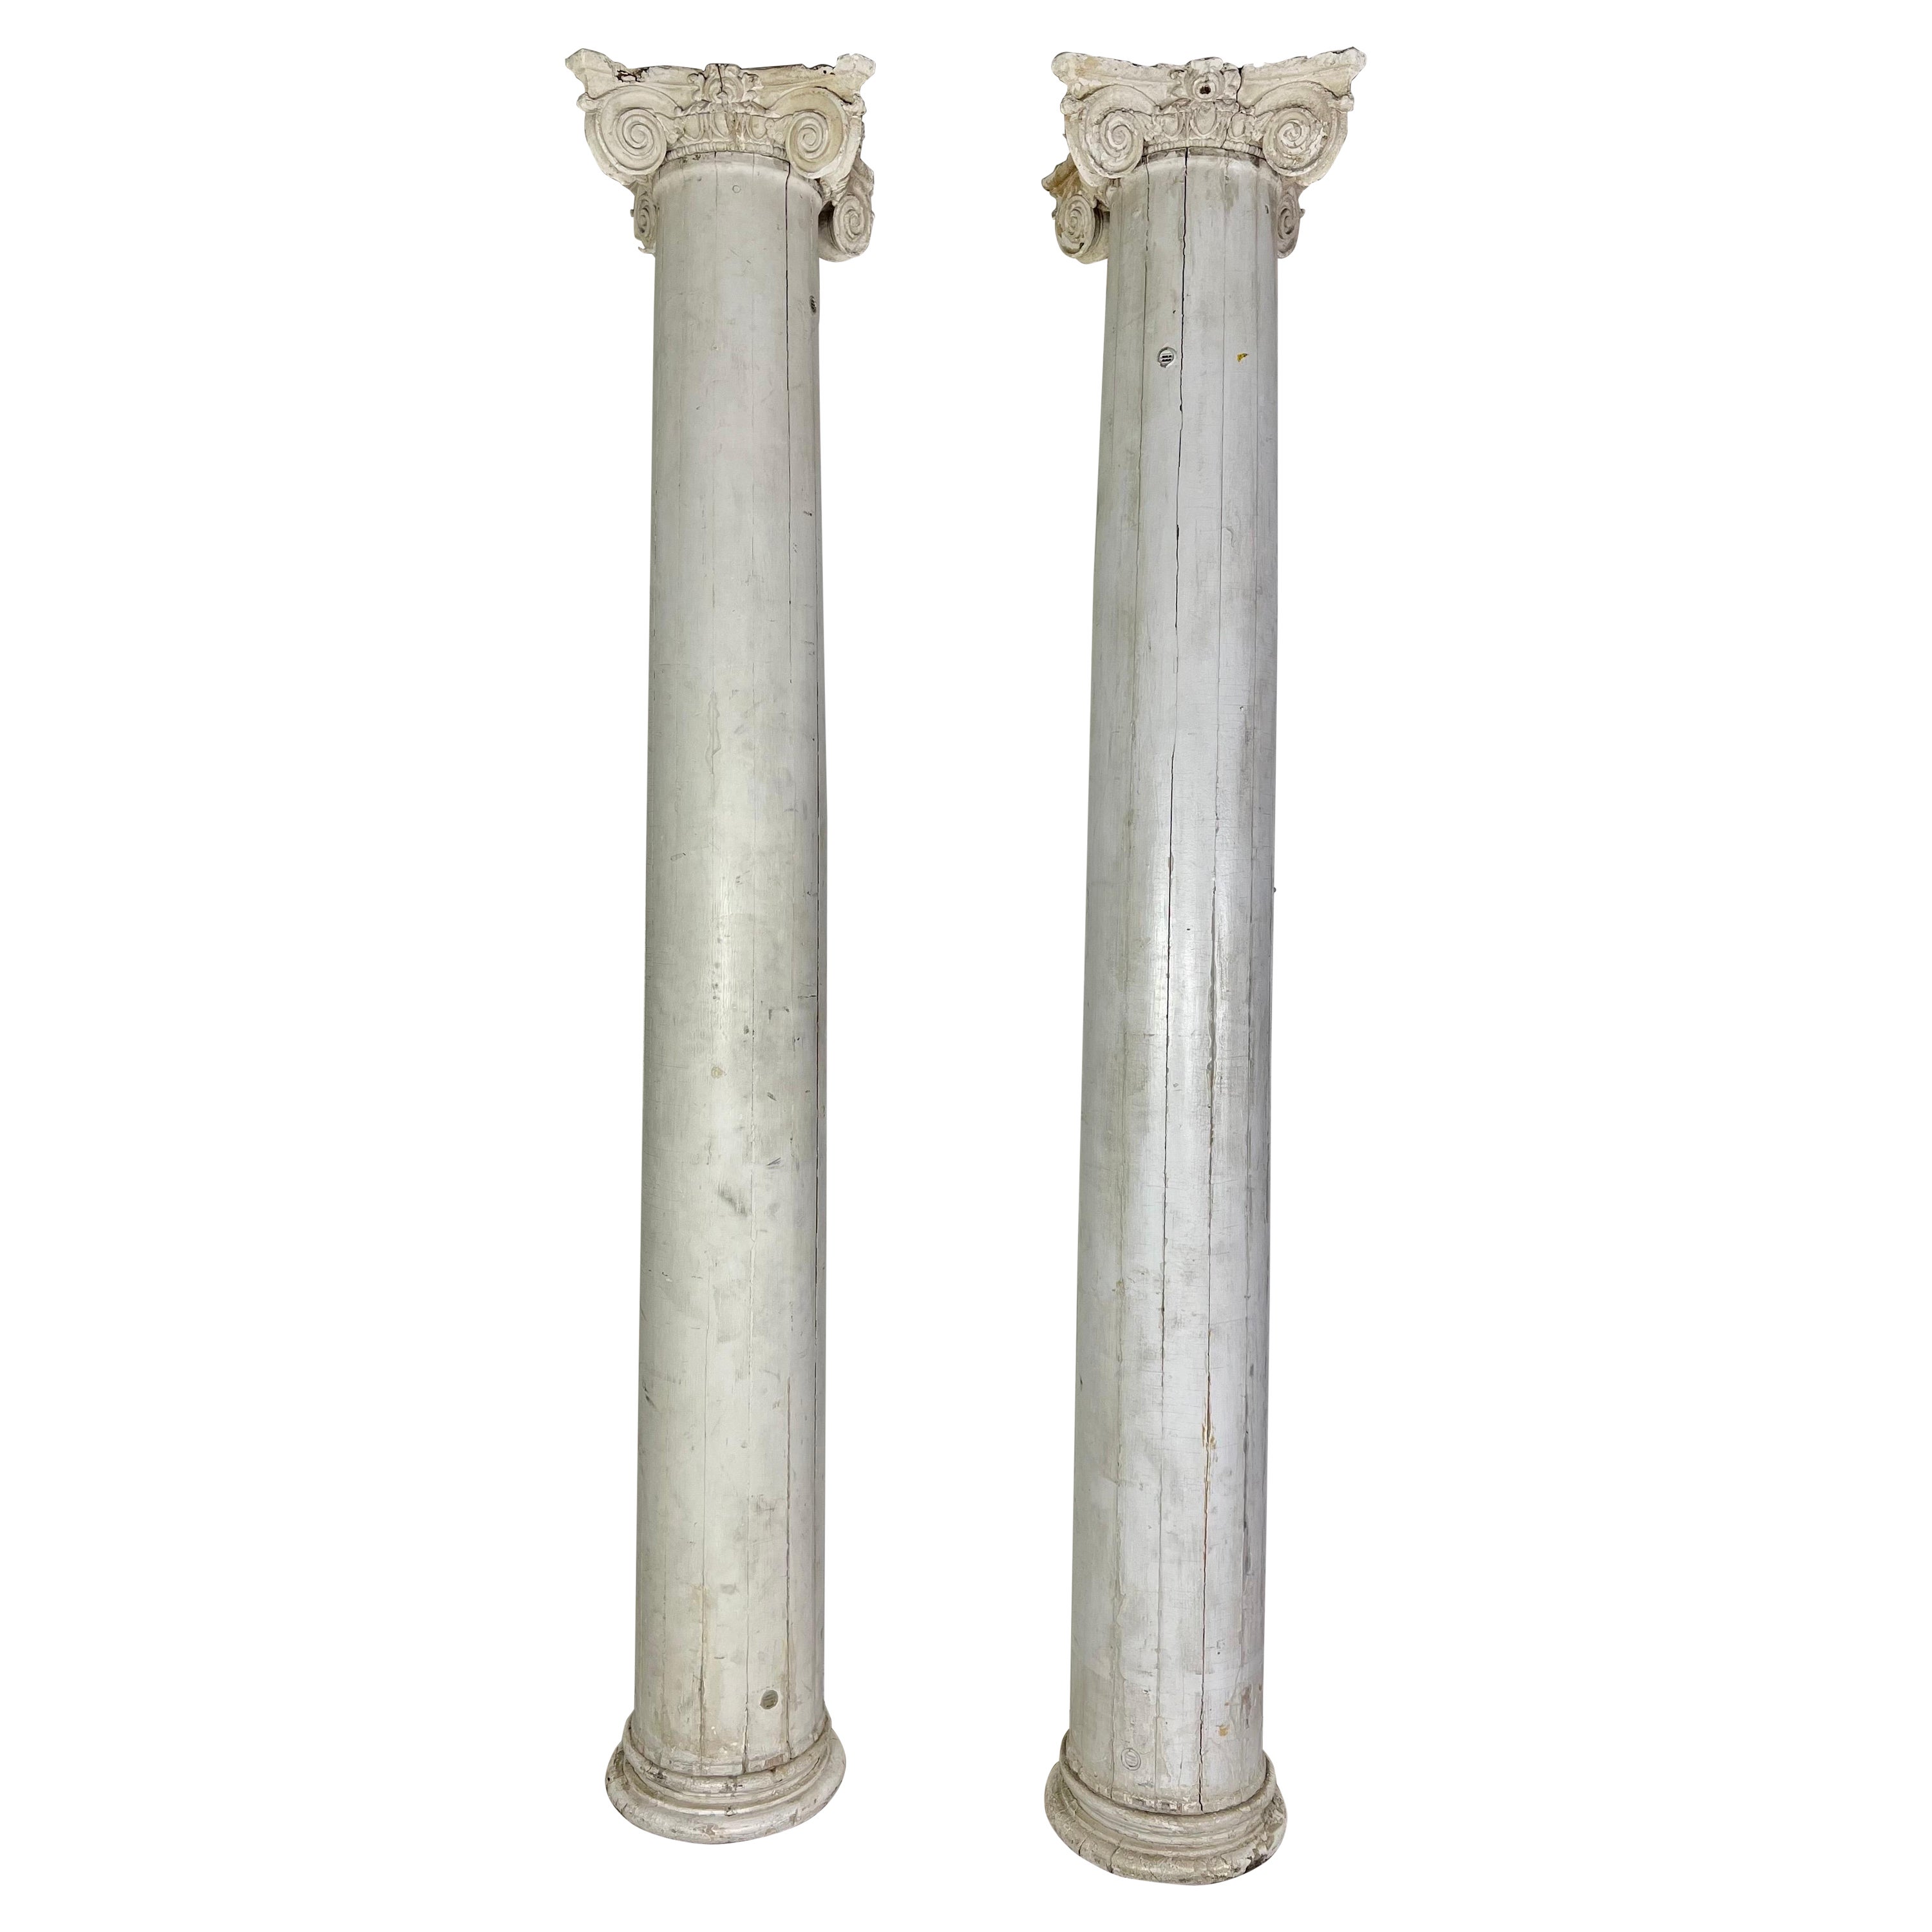 Pair of Italian Corinthian Capitals Sitting on Monumental Columns2 Sets Availabe